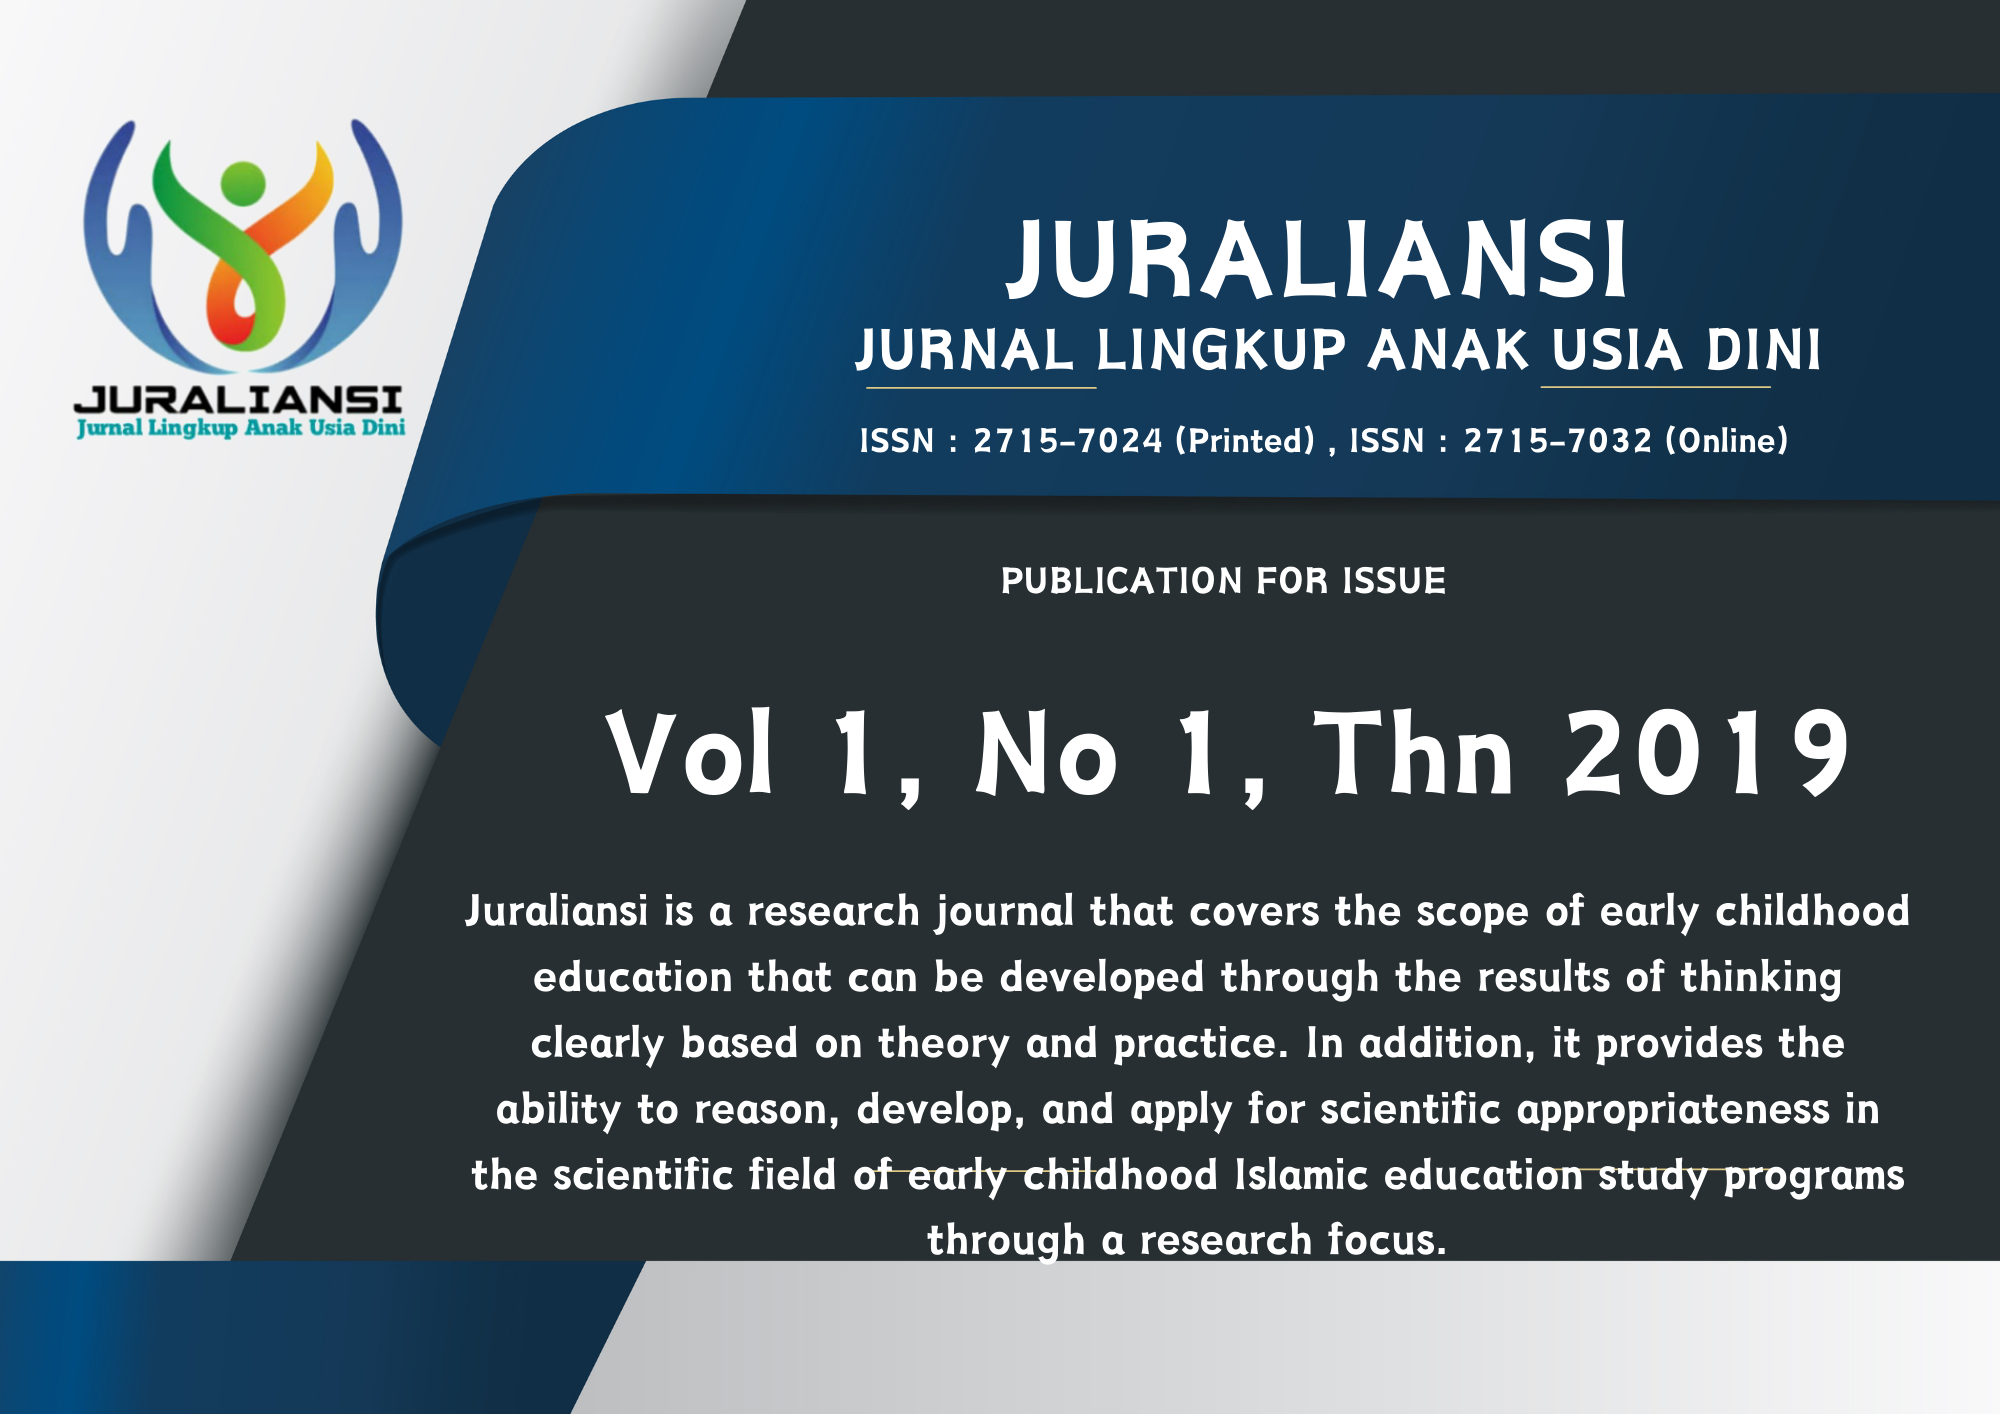 					View Vol. 1 No. 1 (2019): JURALIANSI (JURNAL LINGKUP ANAK USIA DINI)
				